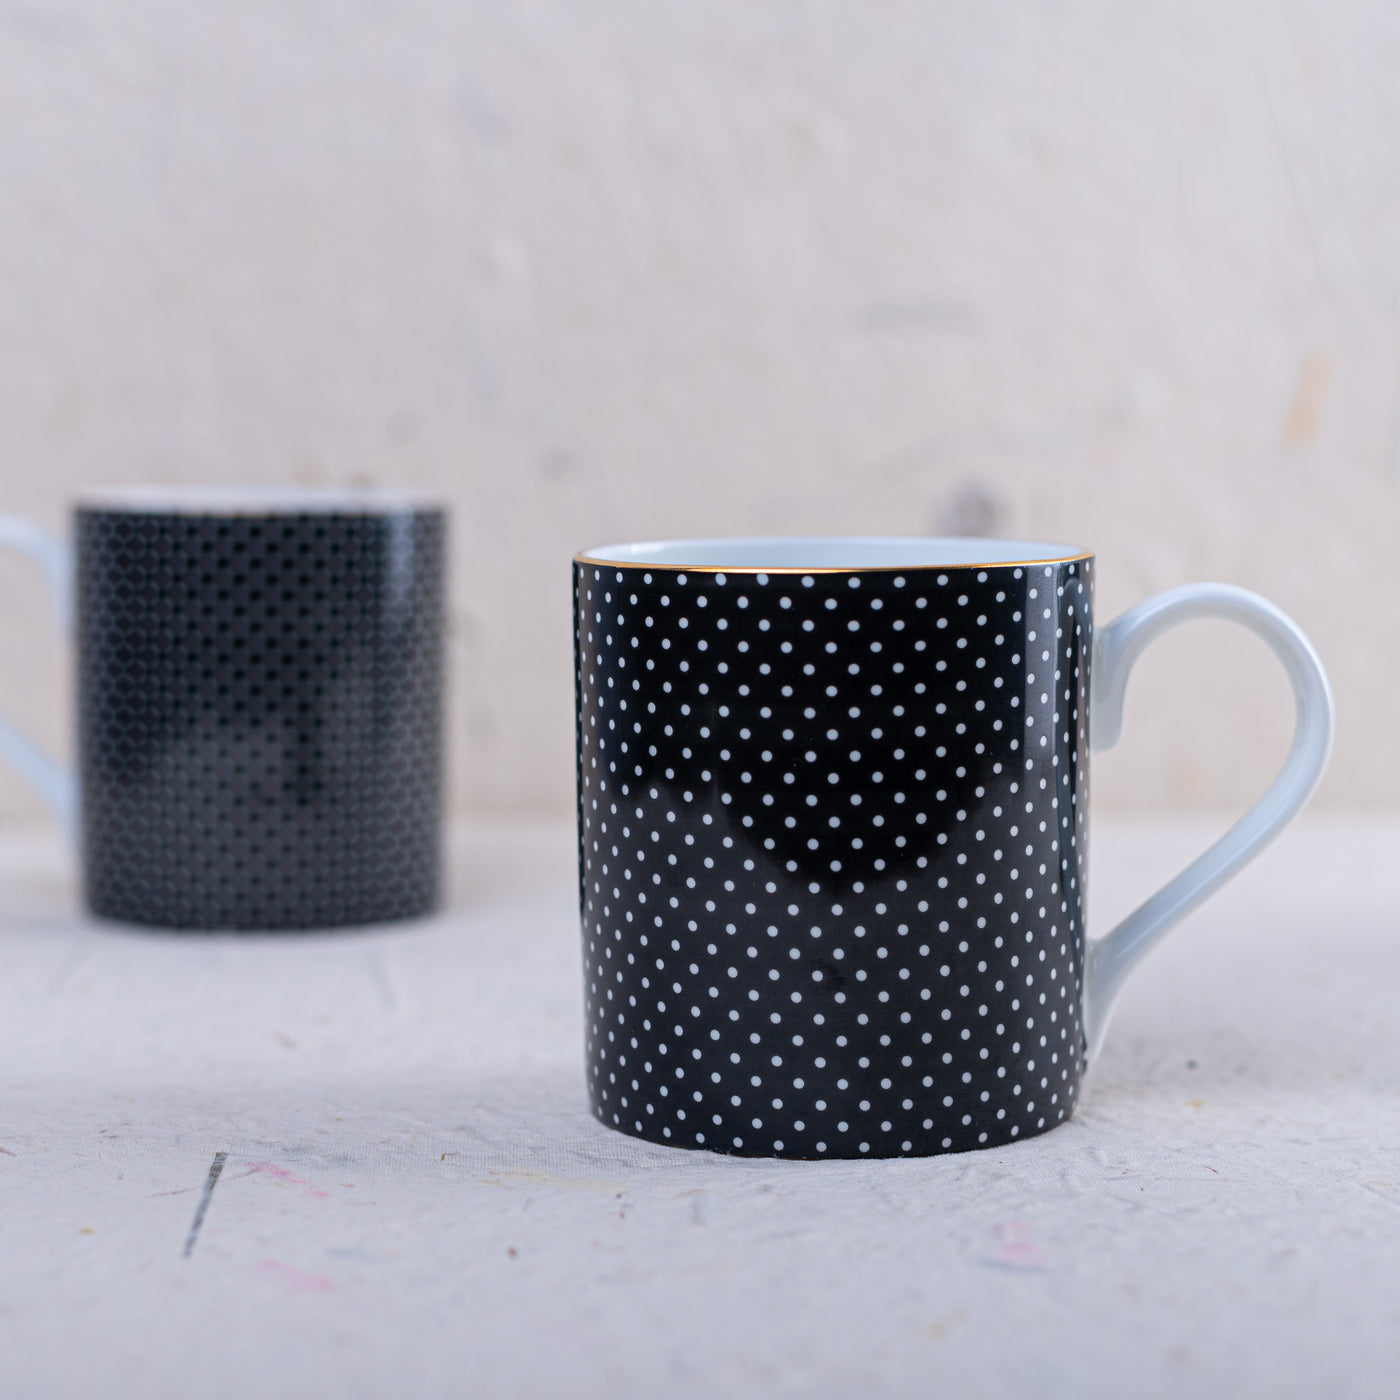 Stylish coffee mugs by Home 360